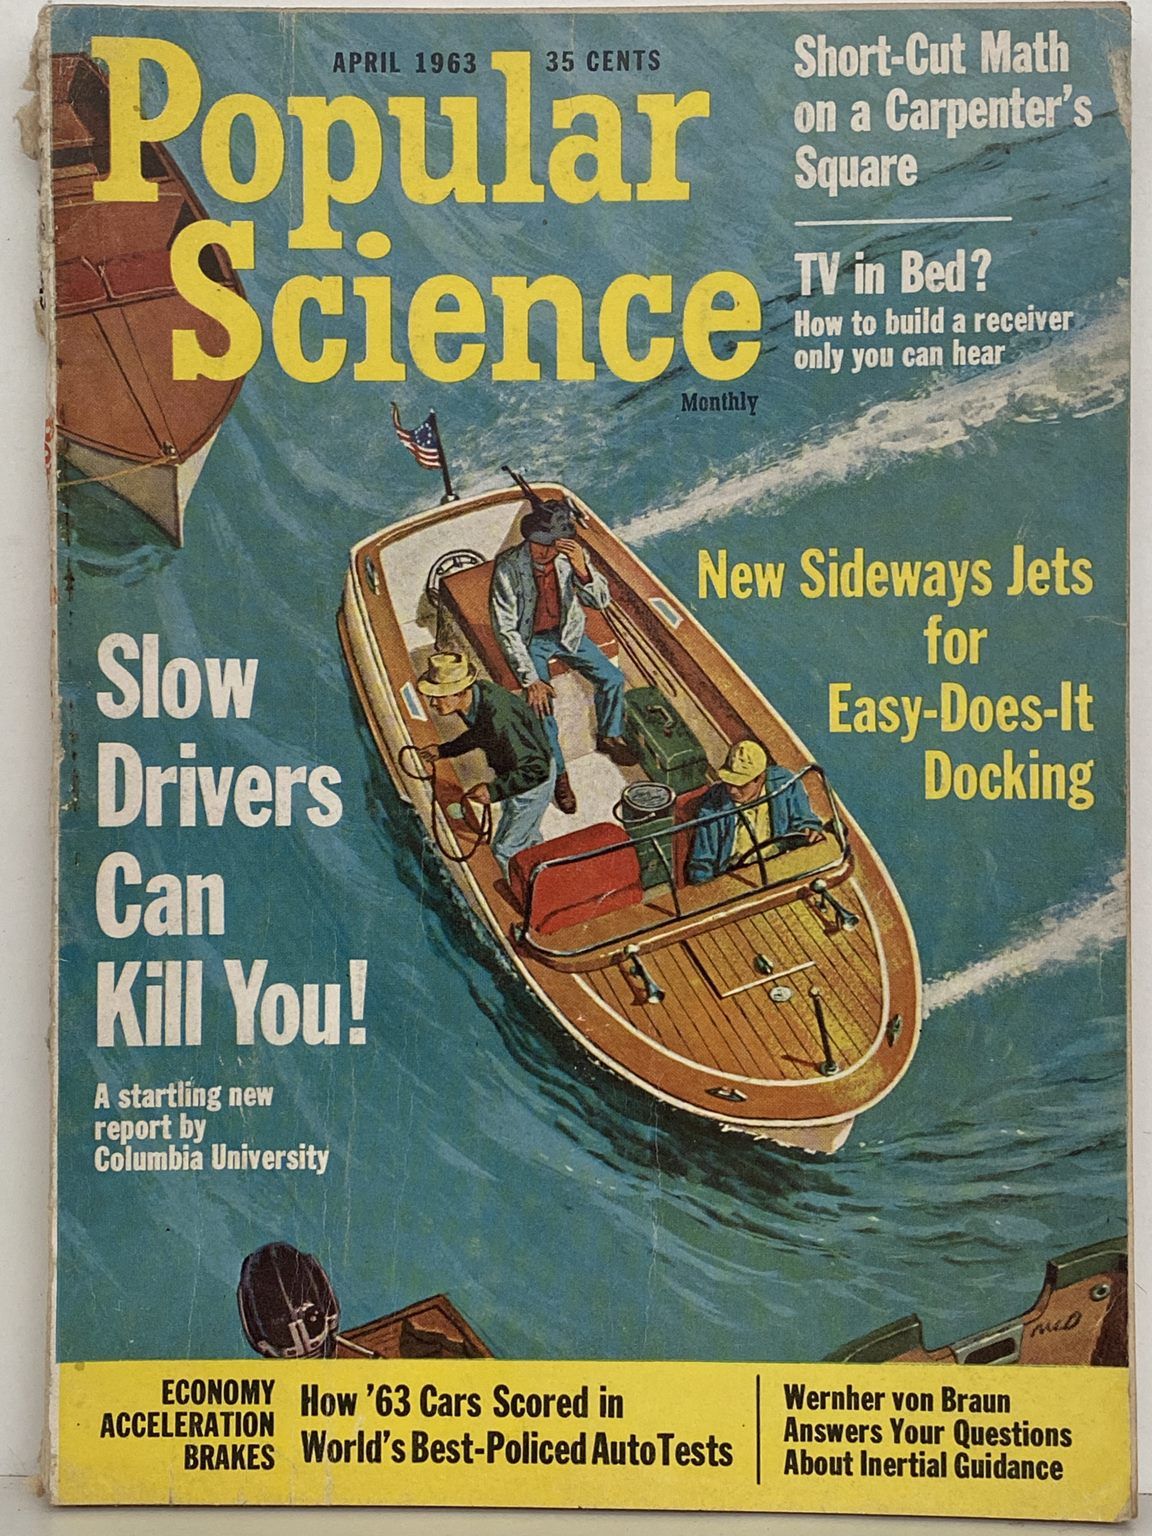 VINTAGE MAGAZINE: Popular Science, Vol. 182, No. 4 - April 1963